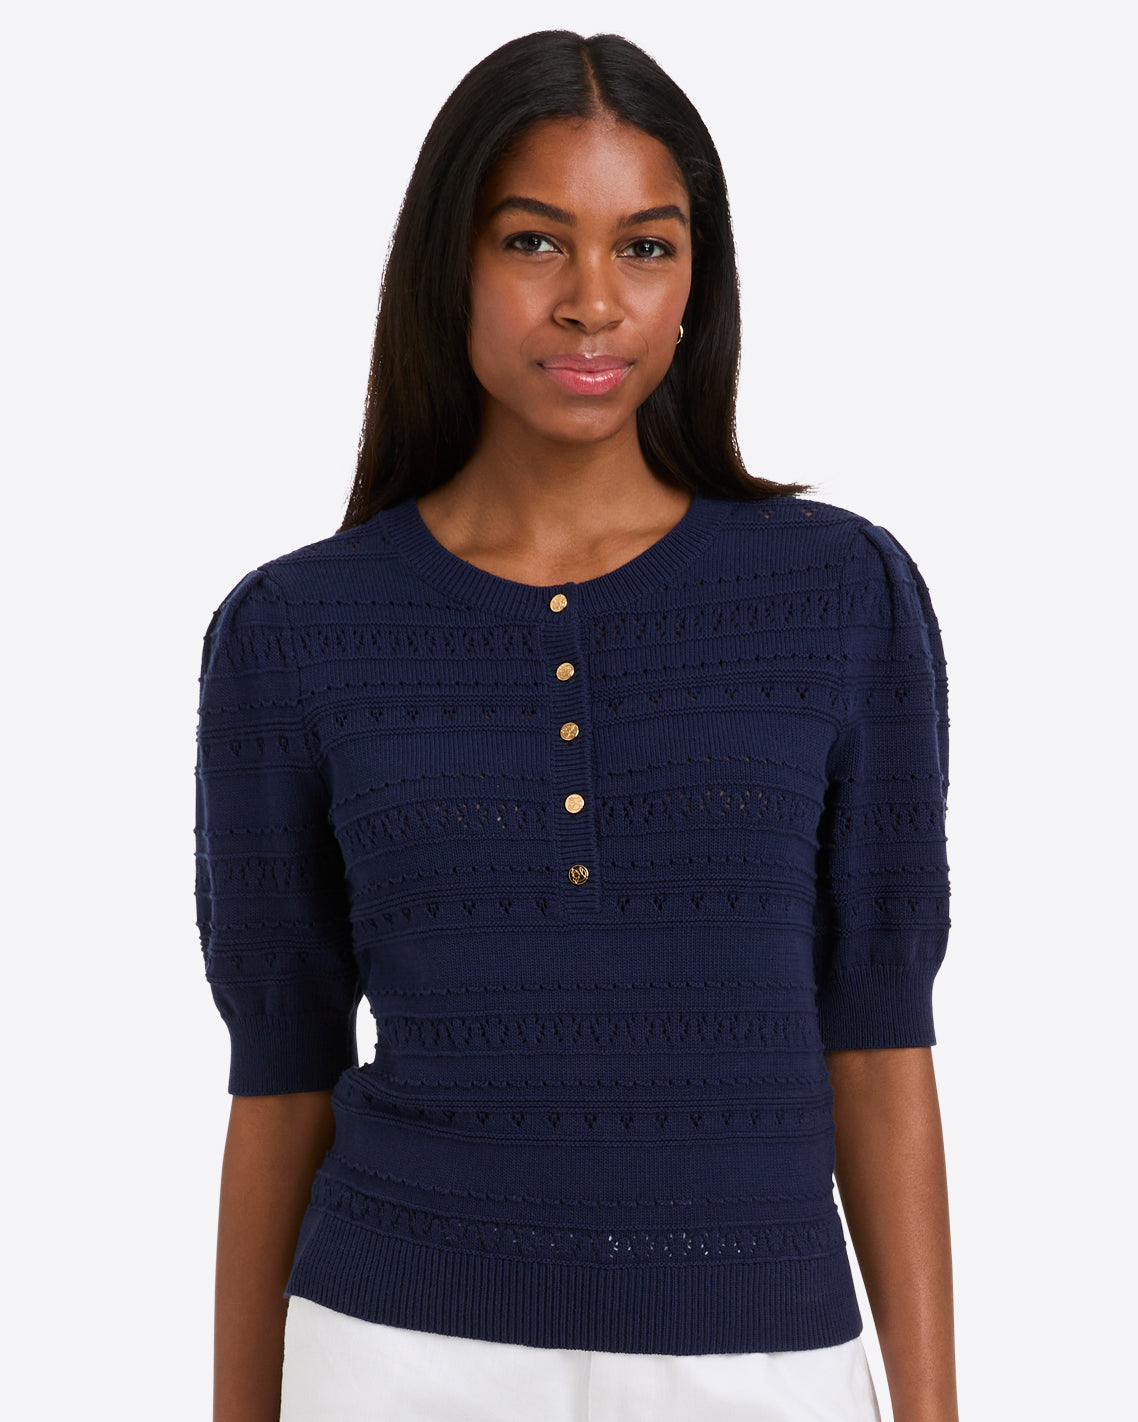 Annabelle Short-Sleeve Sweater in Navy Pointelle